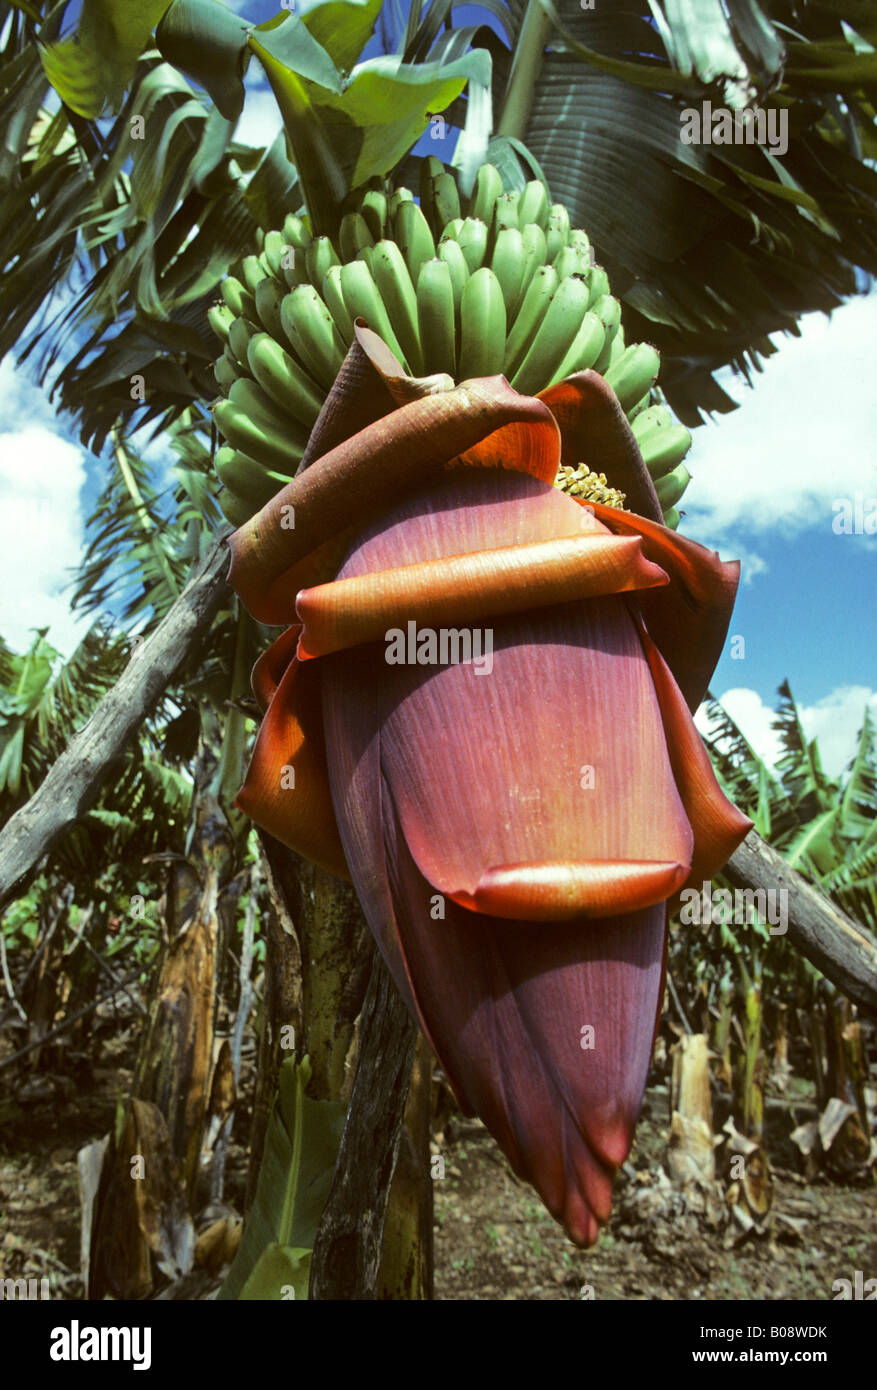 Banana plant (Musaceae), green bananas and leaves, La Palma Island, Canary Islands, Spain Stock Photo